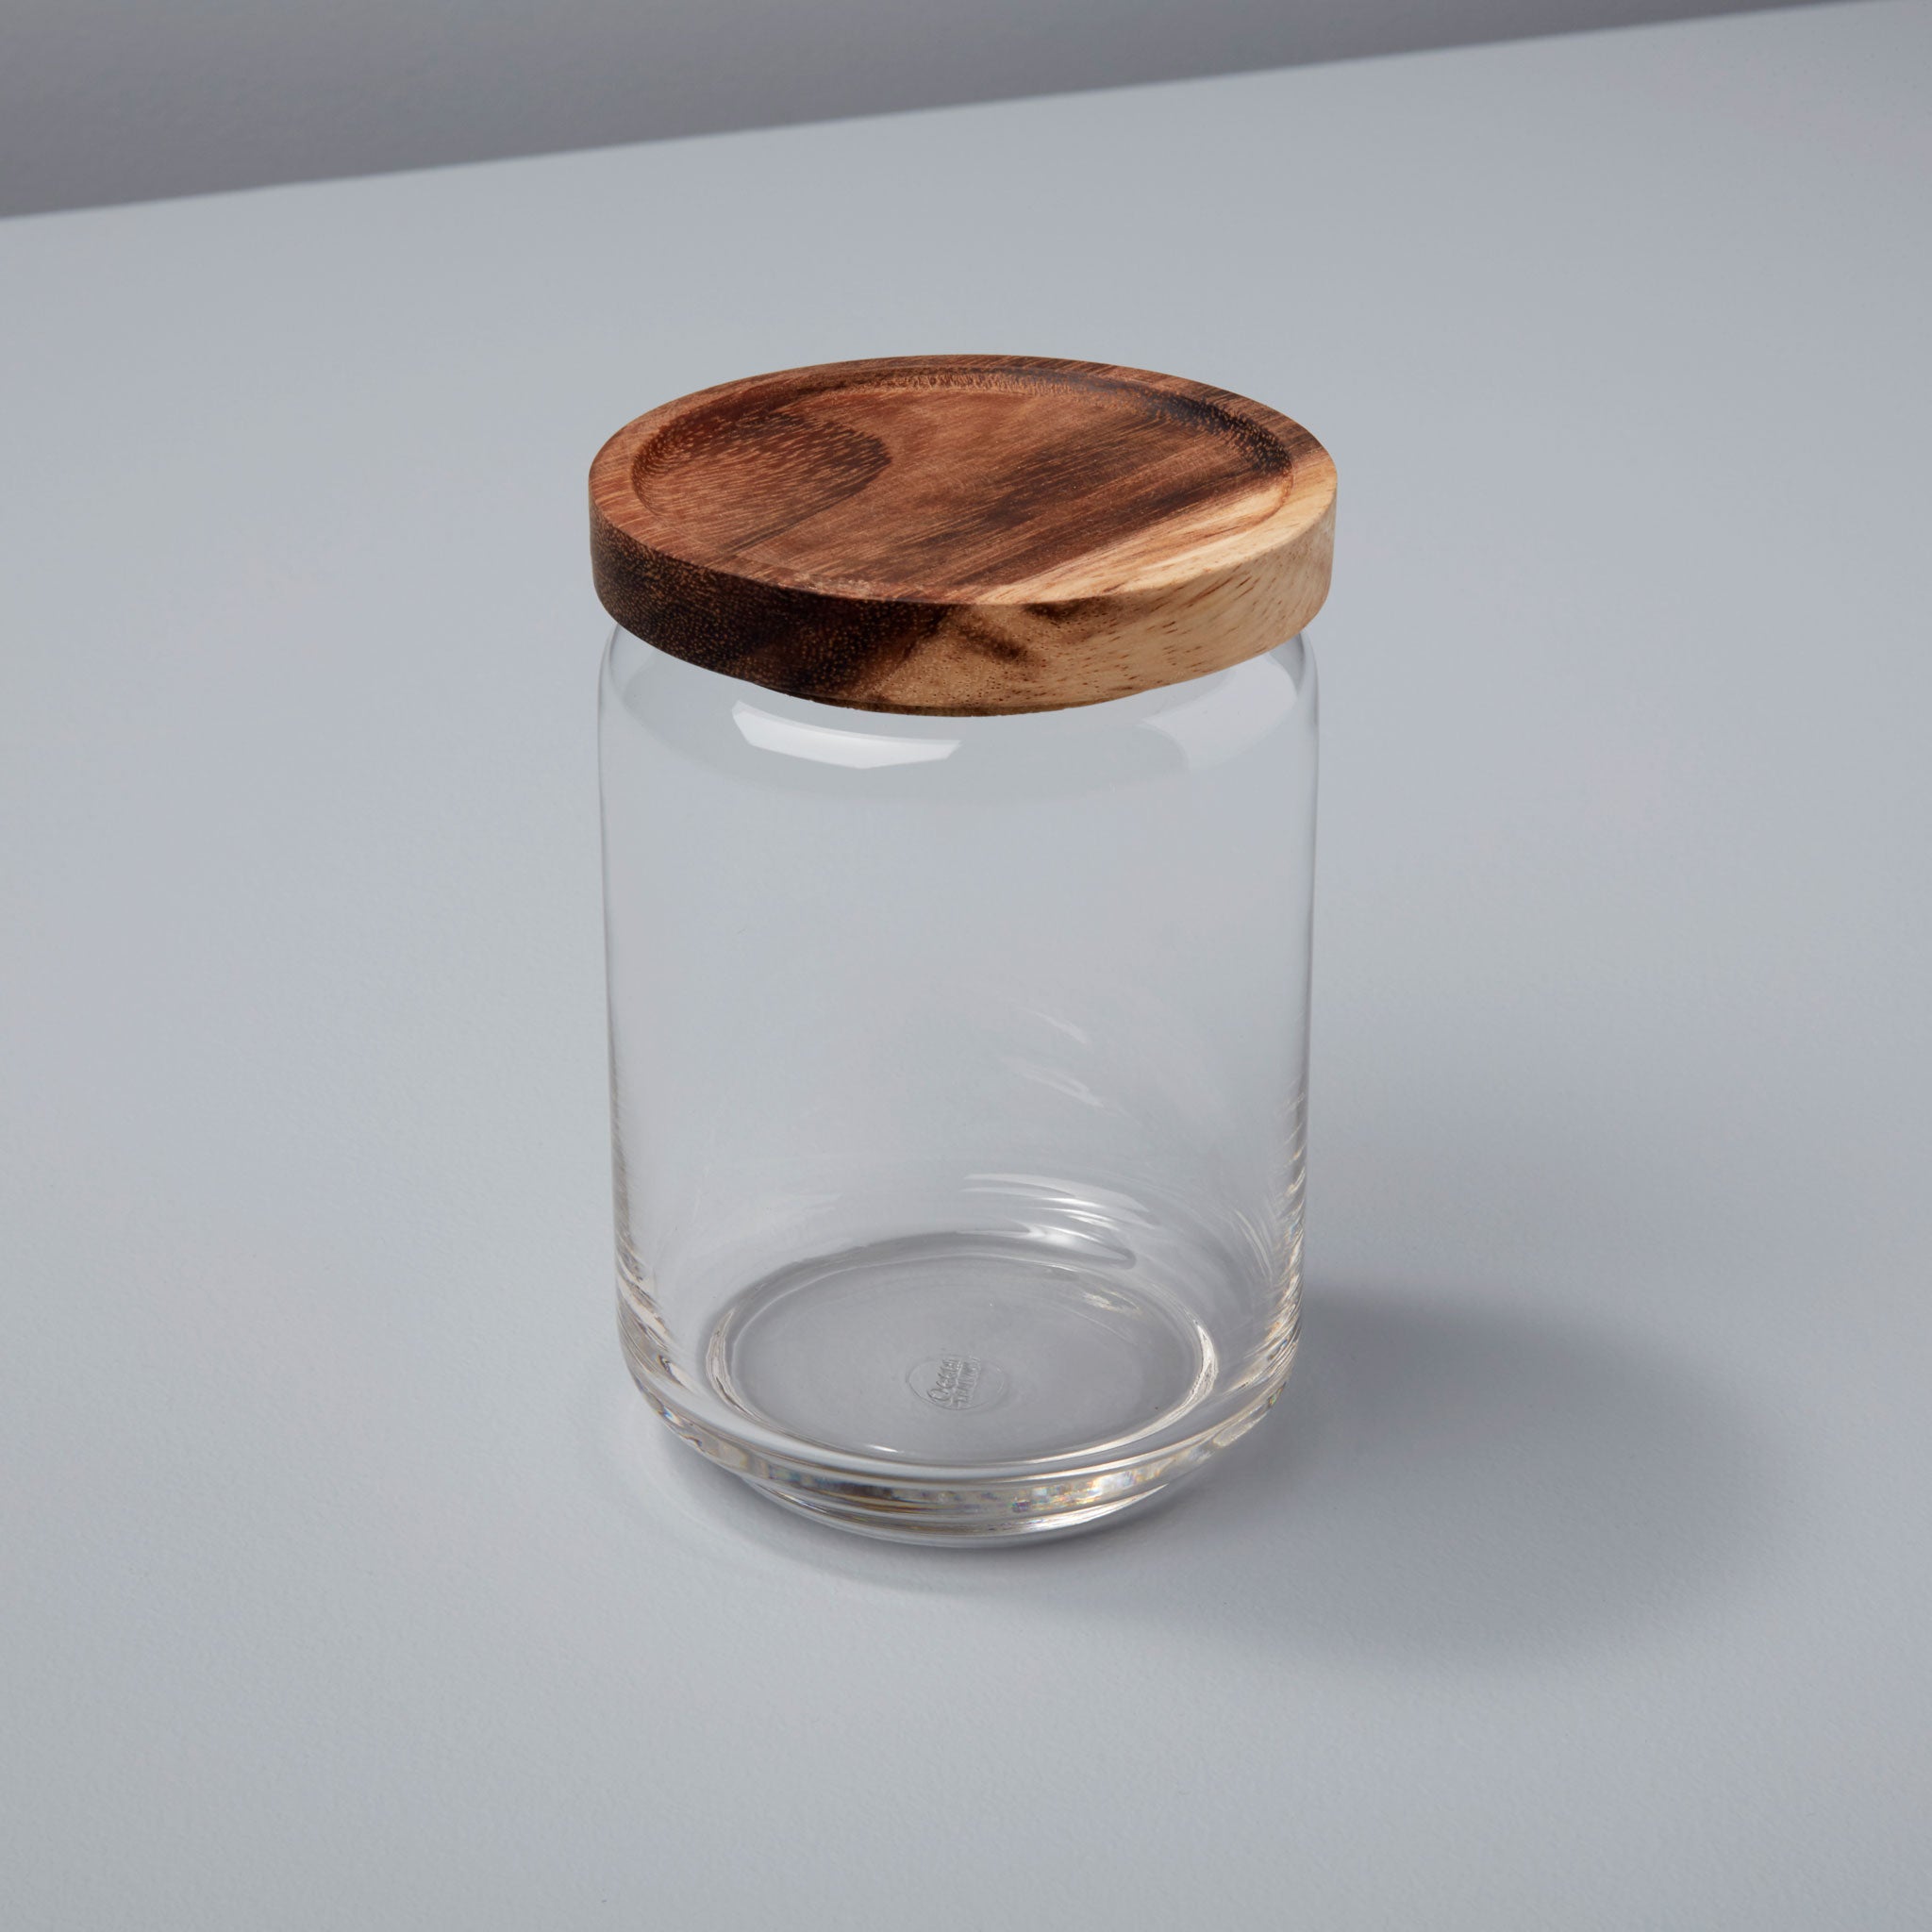 Sage Spoonfuls Make in Bulk Glass Jars